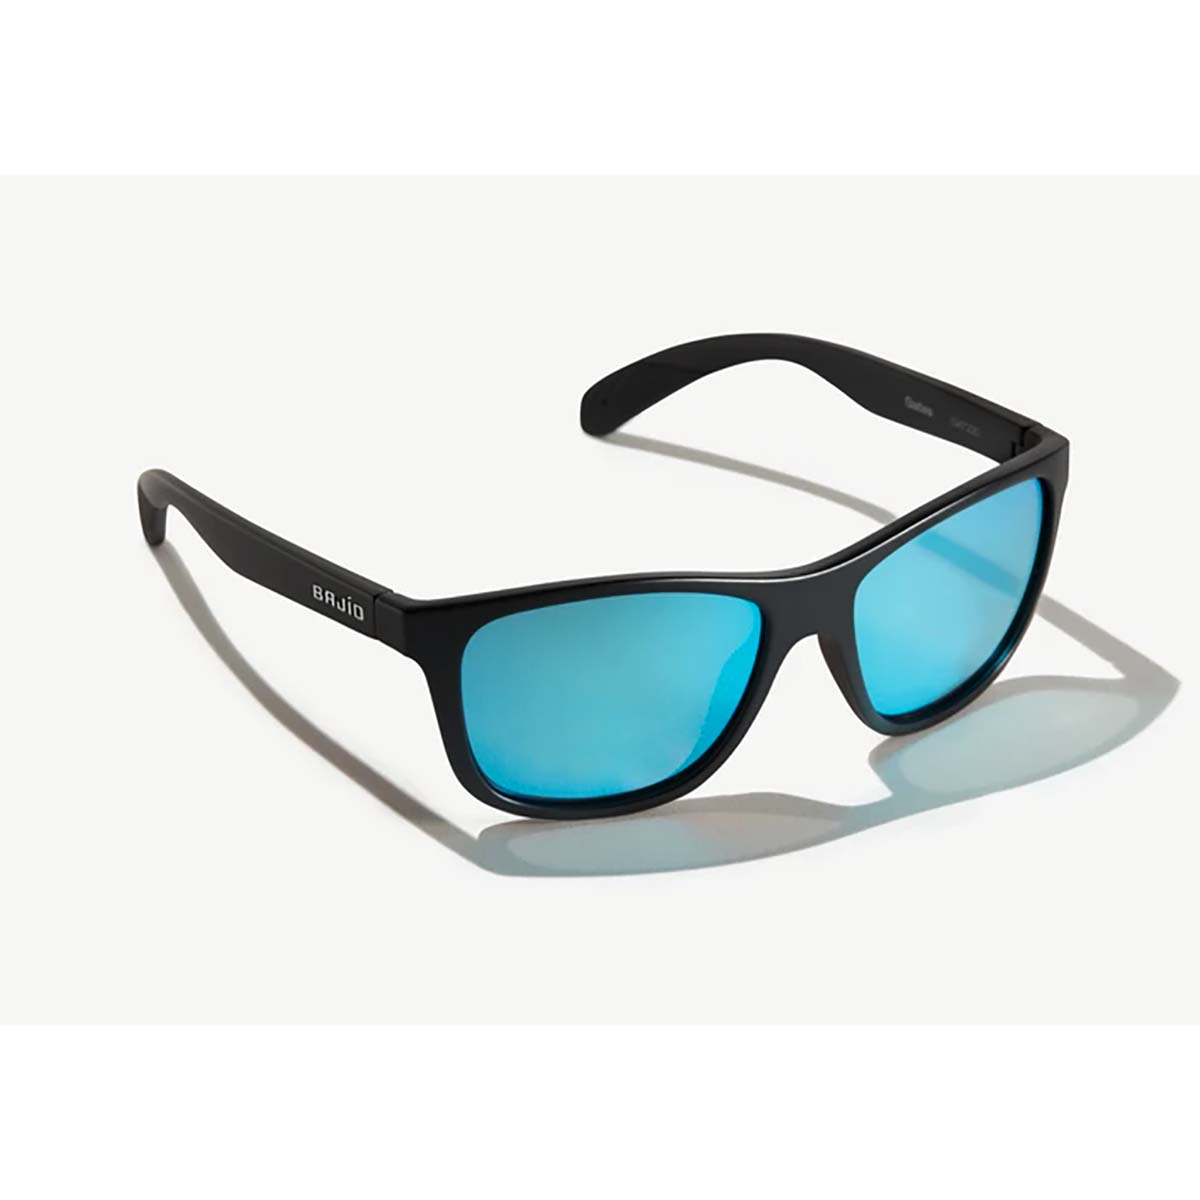 Bajio Gates Sunglasses Black Matte / Blue Plastic